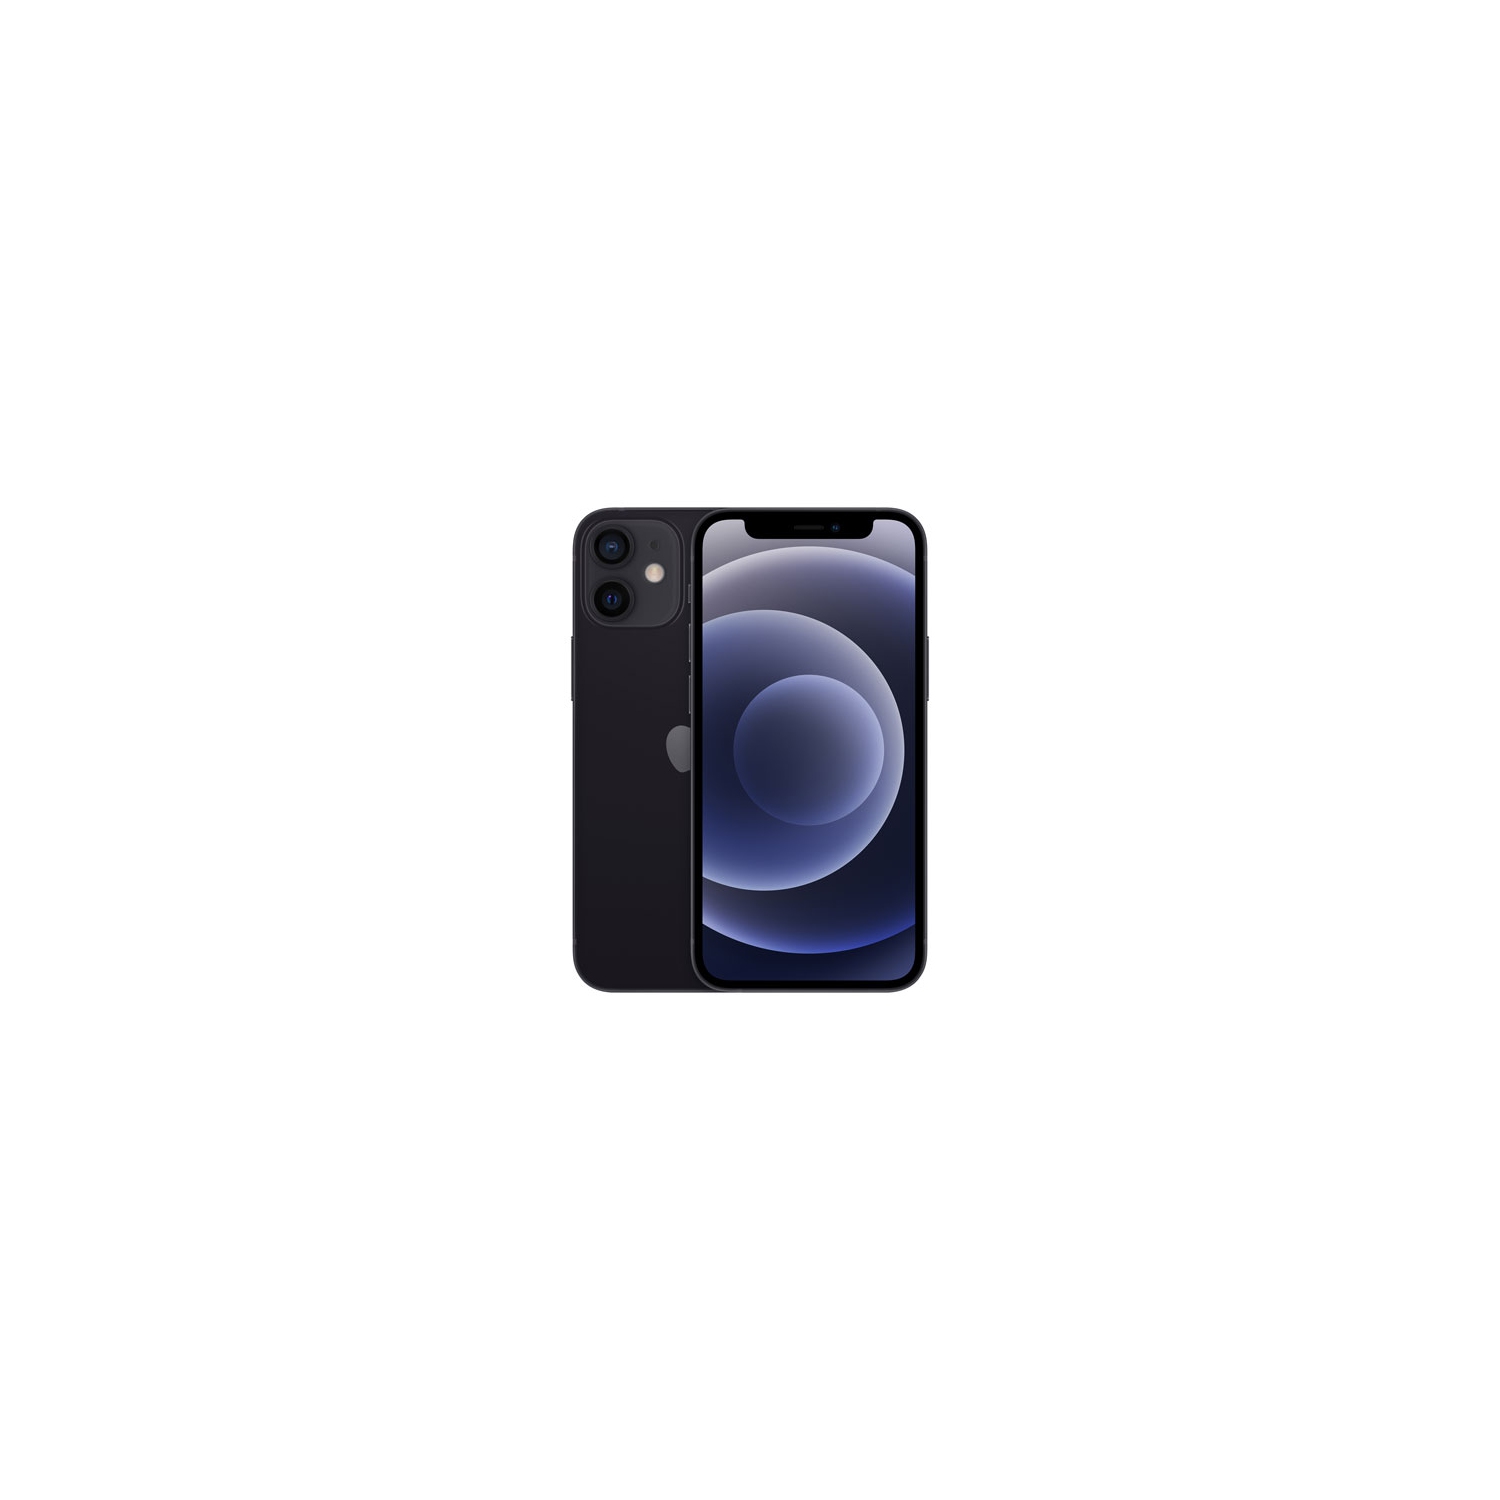 Refurbished (Good) - Apple iPhone 12 mini 128GB Smartphone - Black - Unlocked